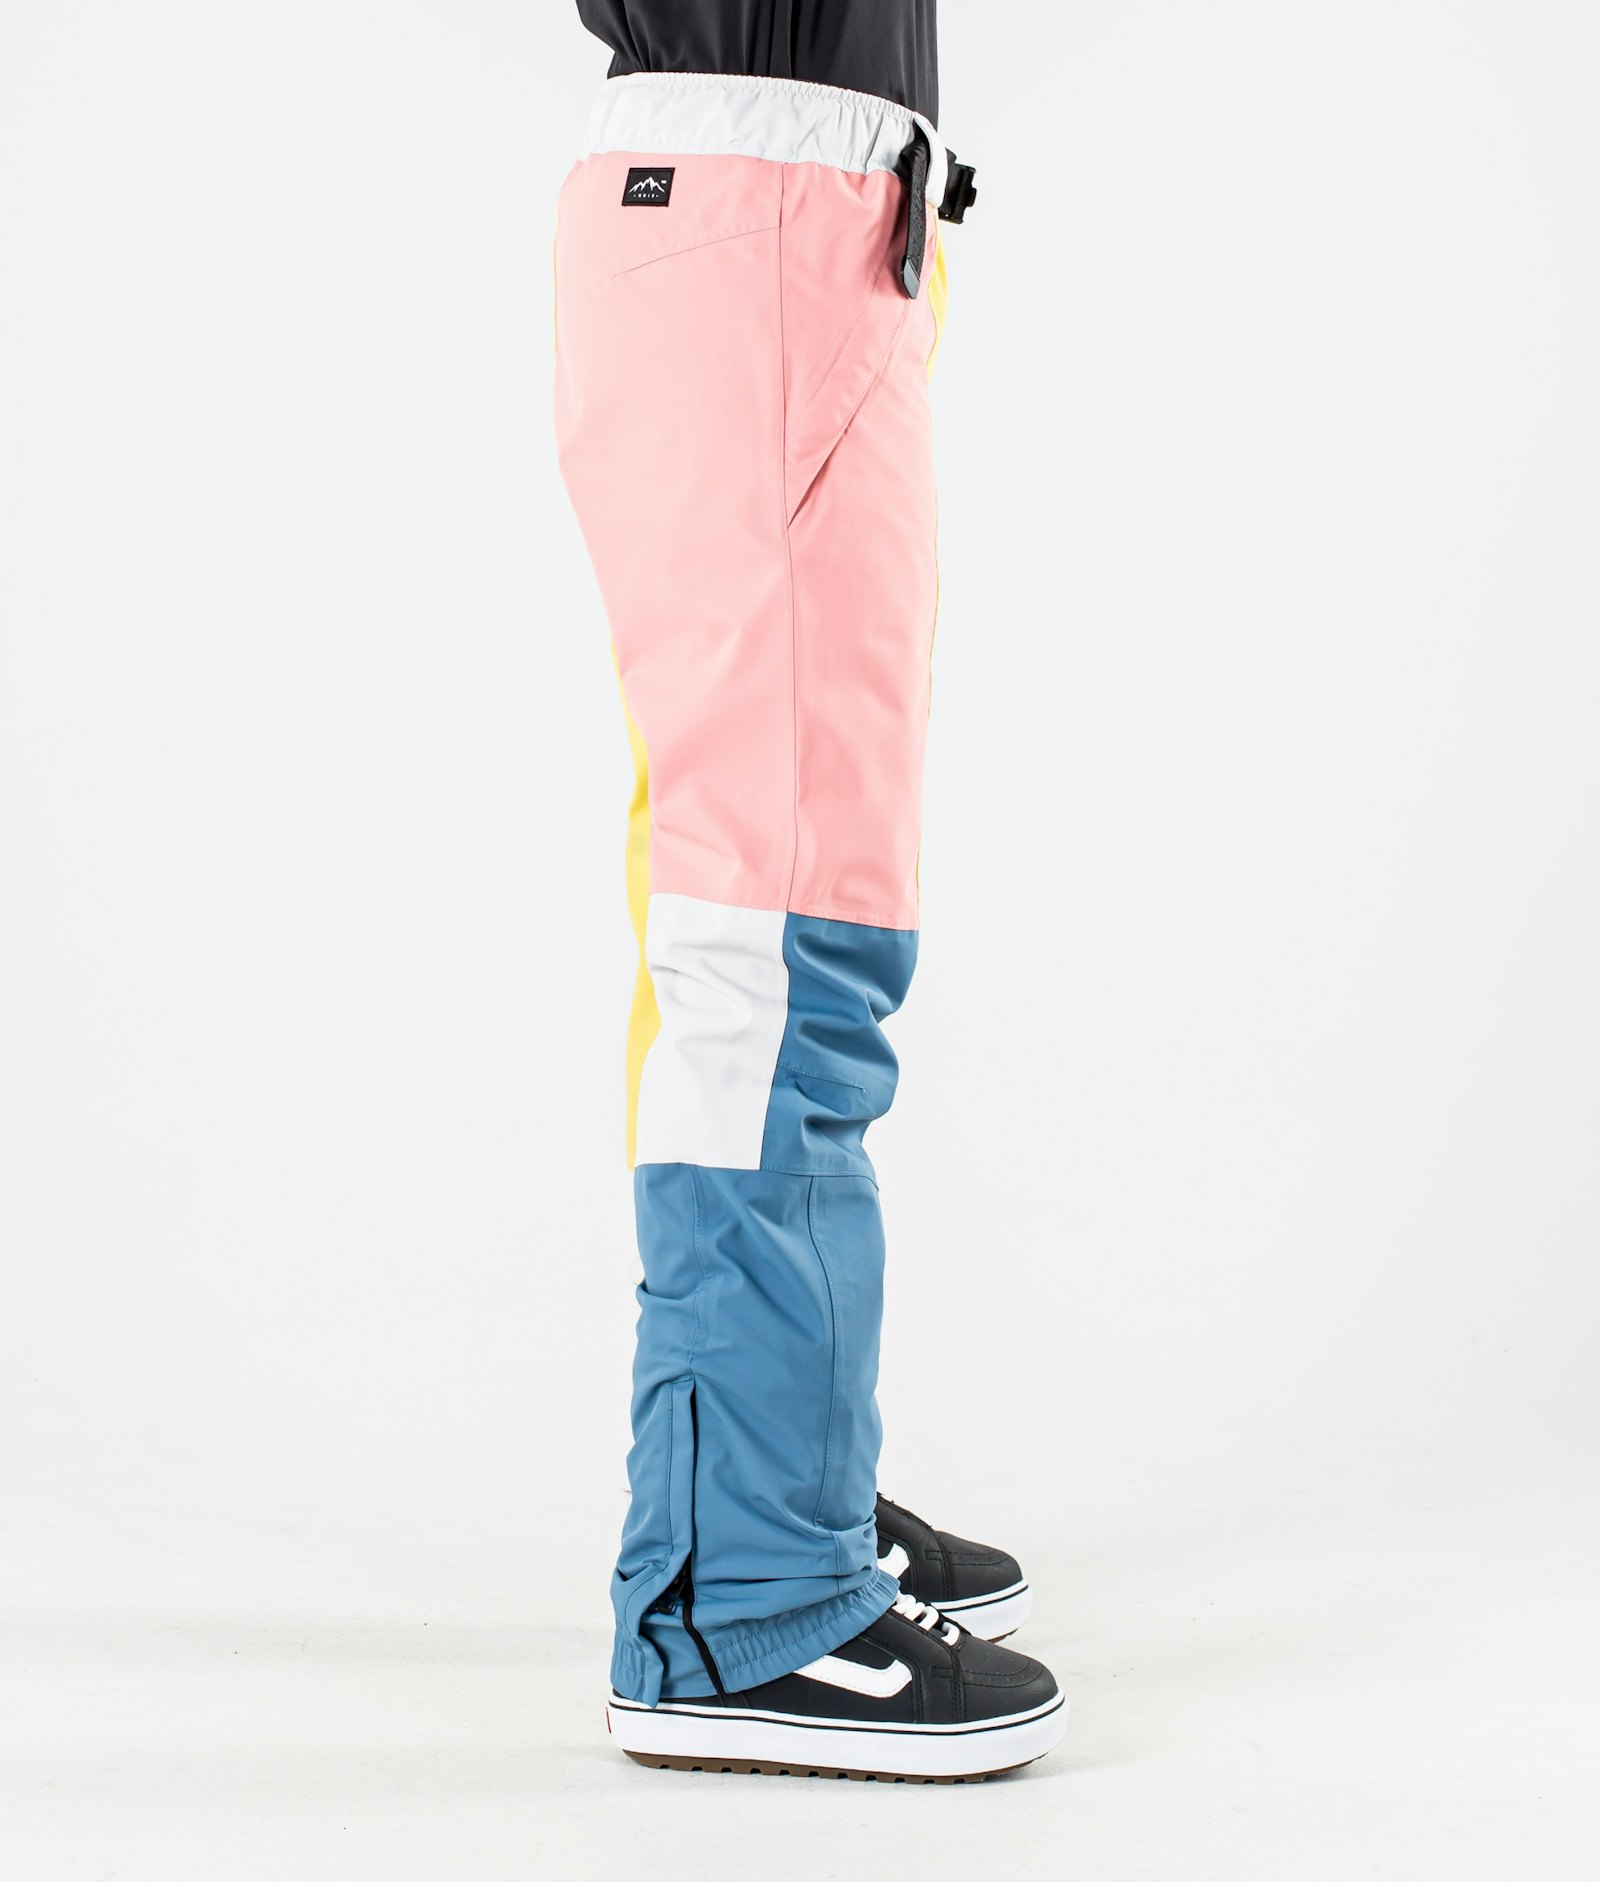 Dope Blizzard W 2020 Snowboard Bukser Dame Limited Edition Pink Patchwork